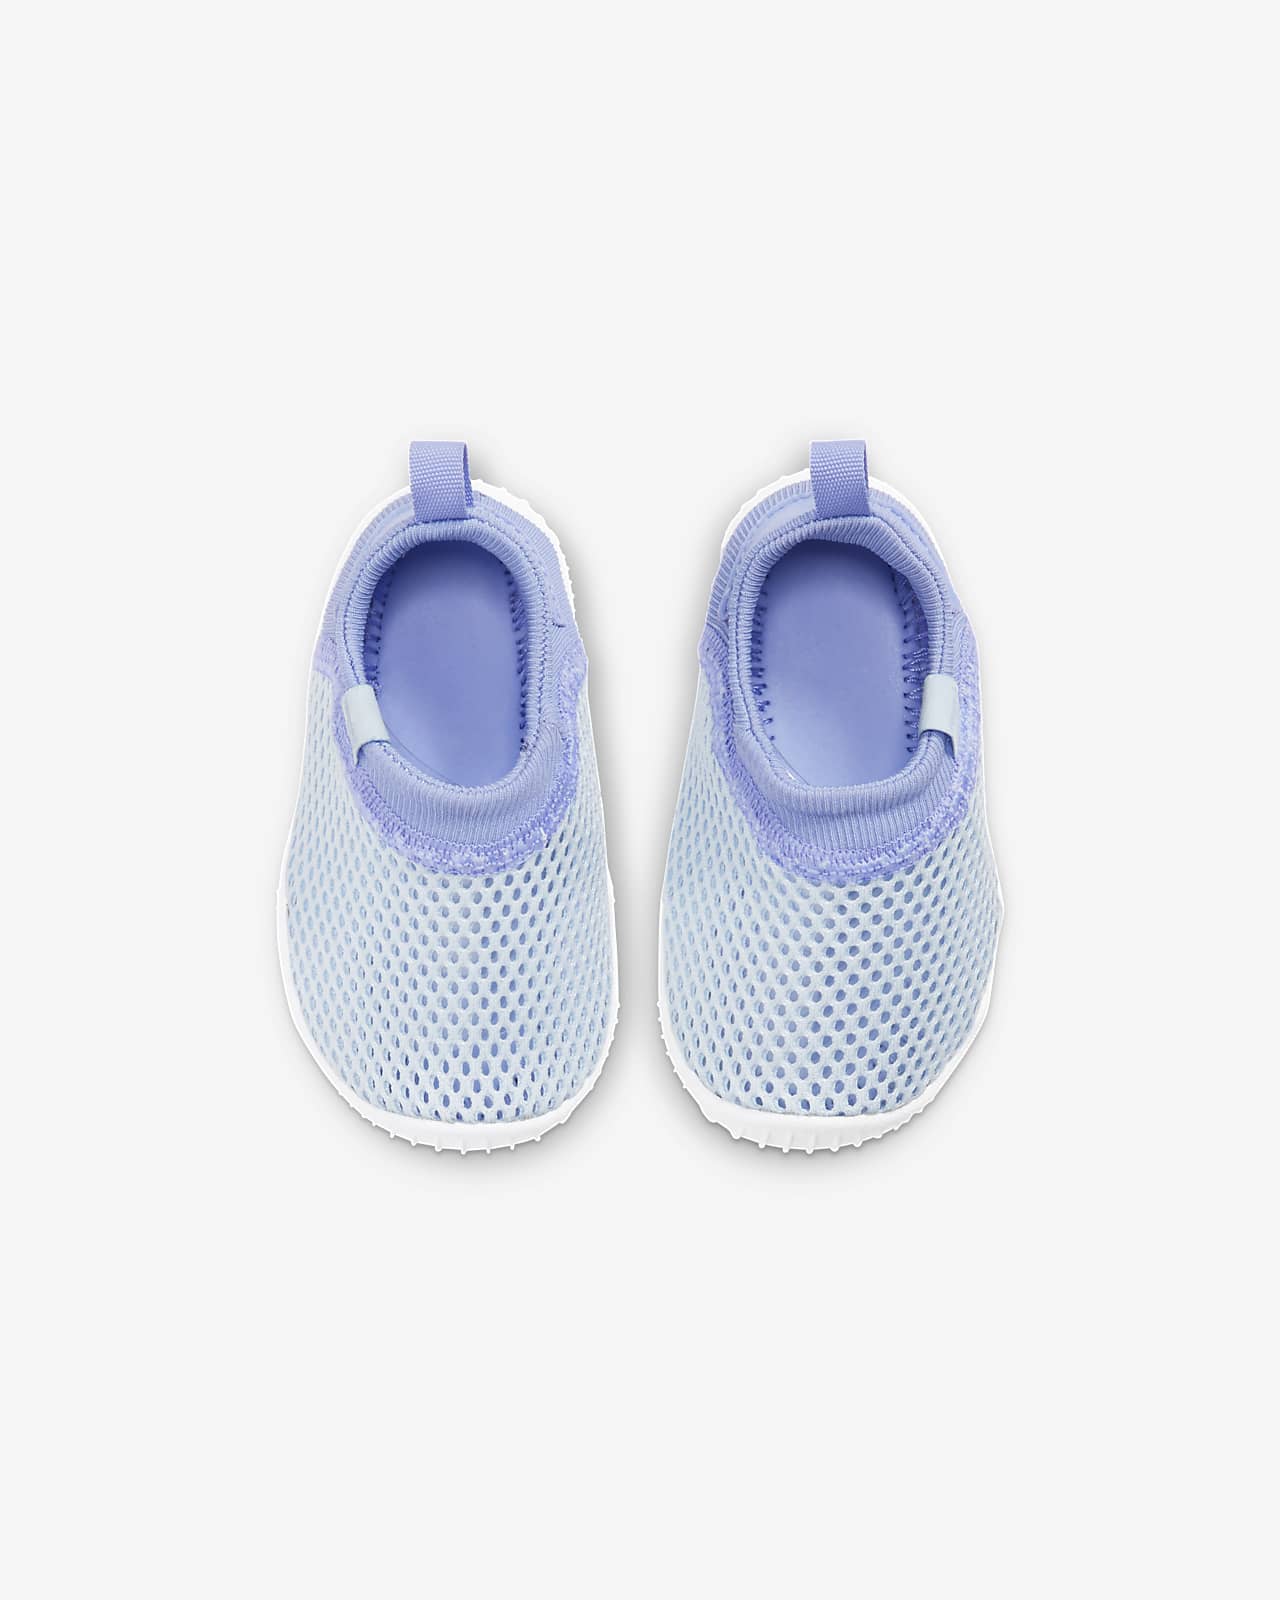 Nike Aqua Sock 360 Infant/Toddler Shoe 